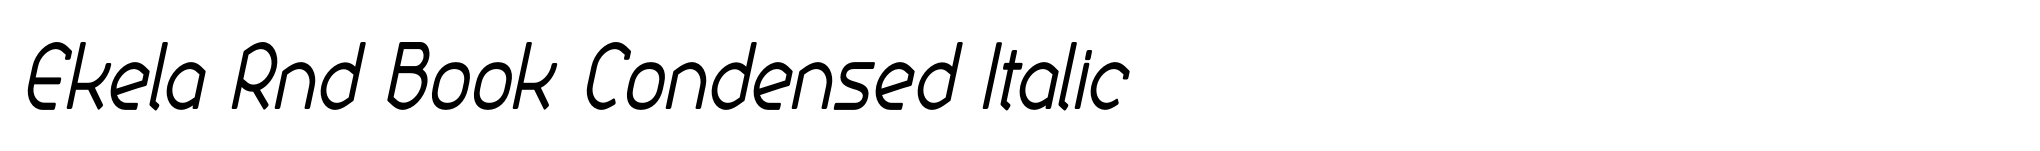 Ekela Rnd Book Condensed Italic image